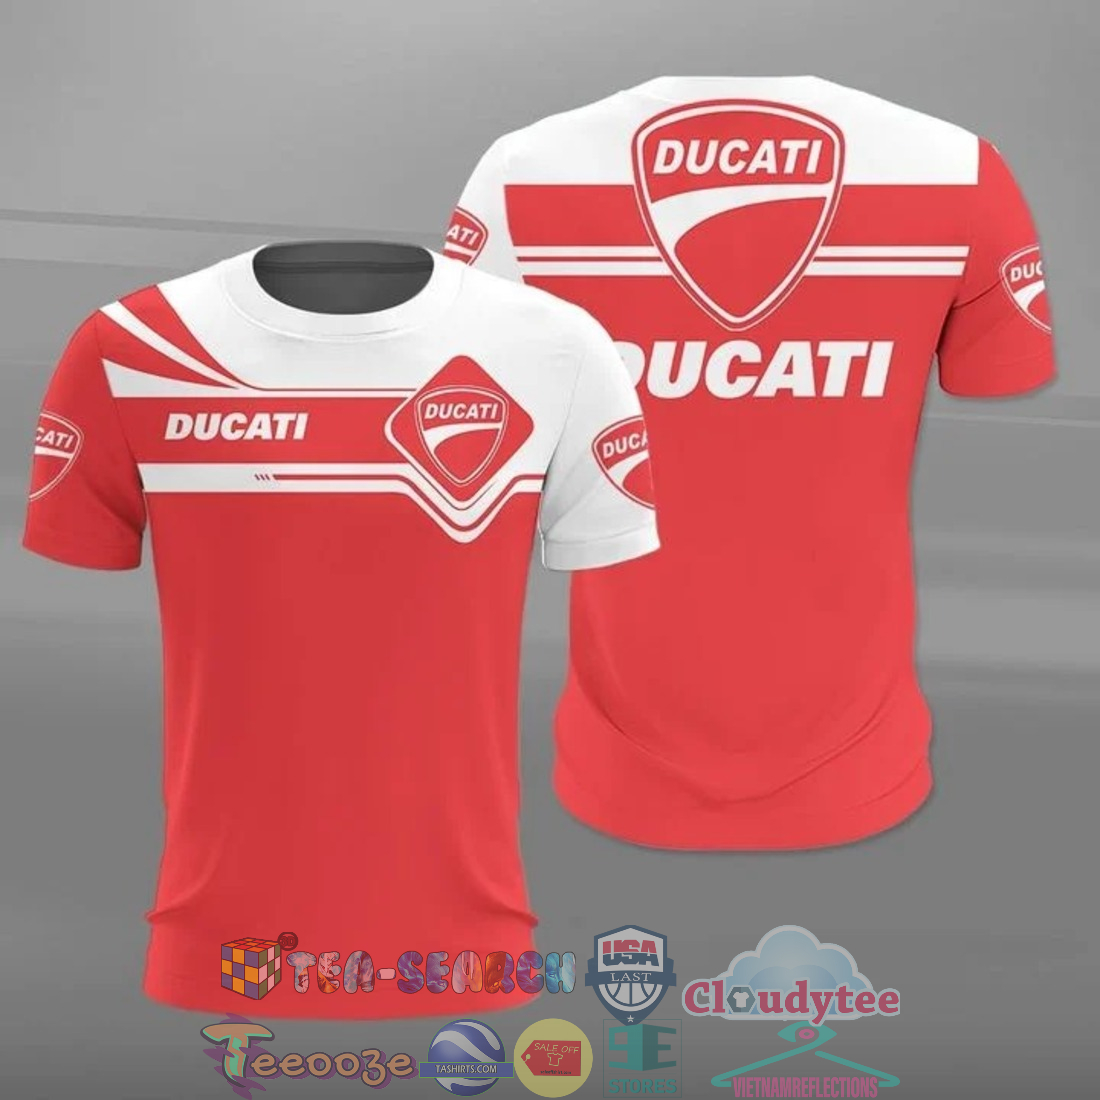 Ducati all over printed t-shirt hoodie